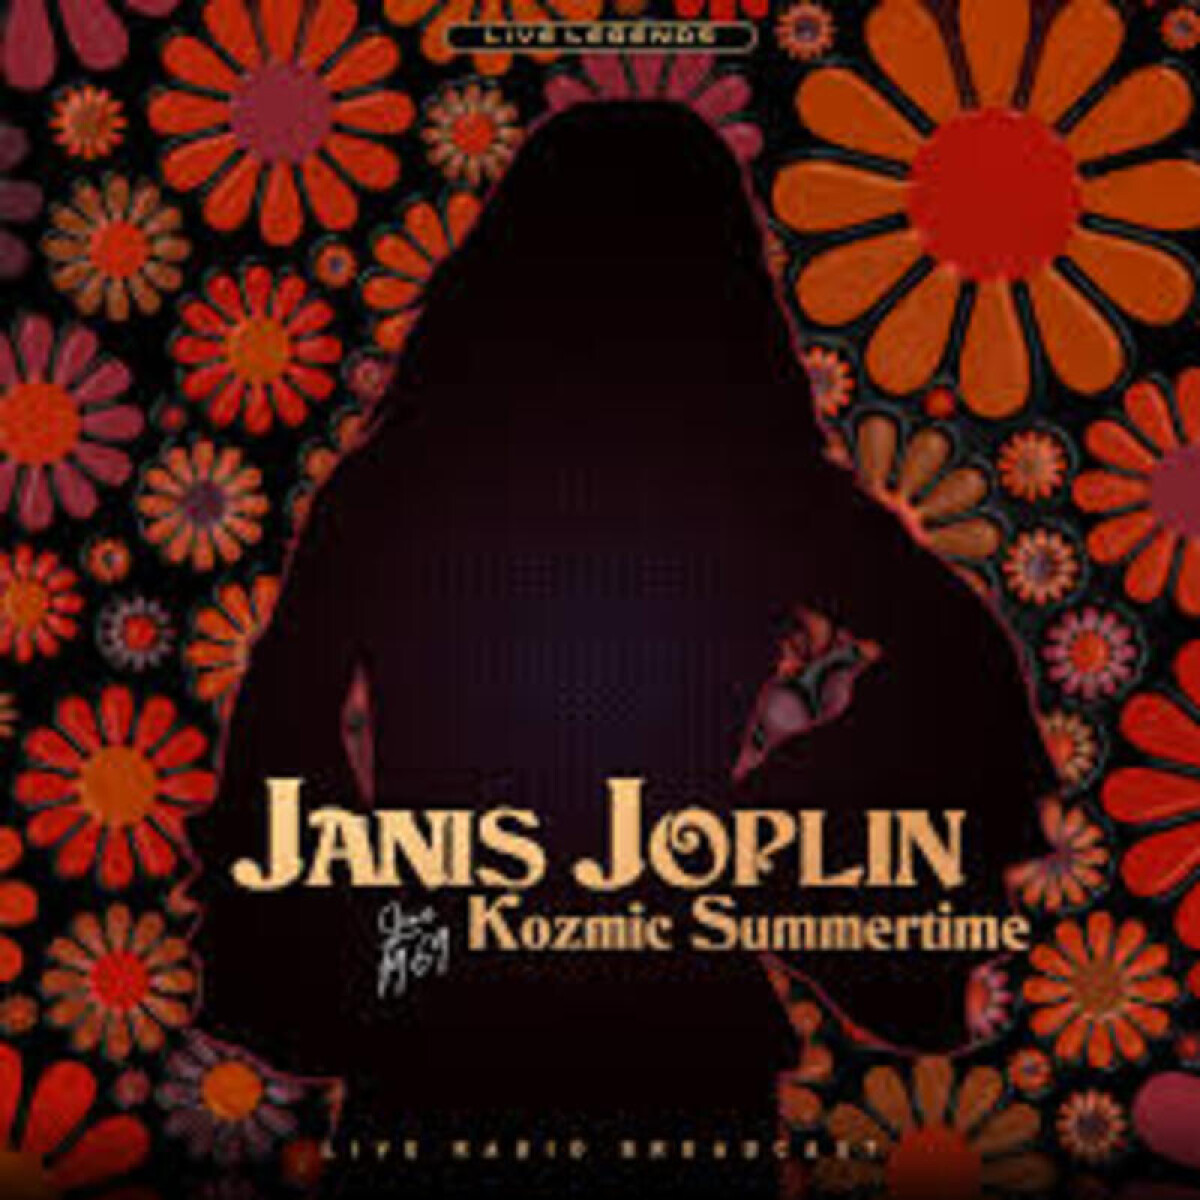 Janis Joplin - Kozmic Summertime 